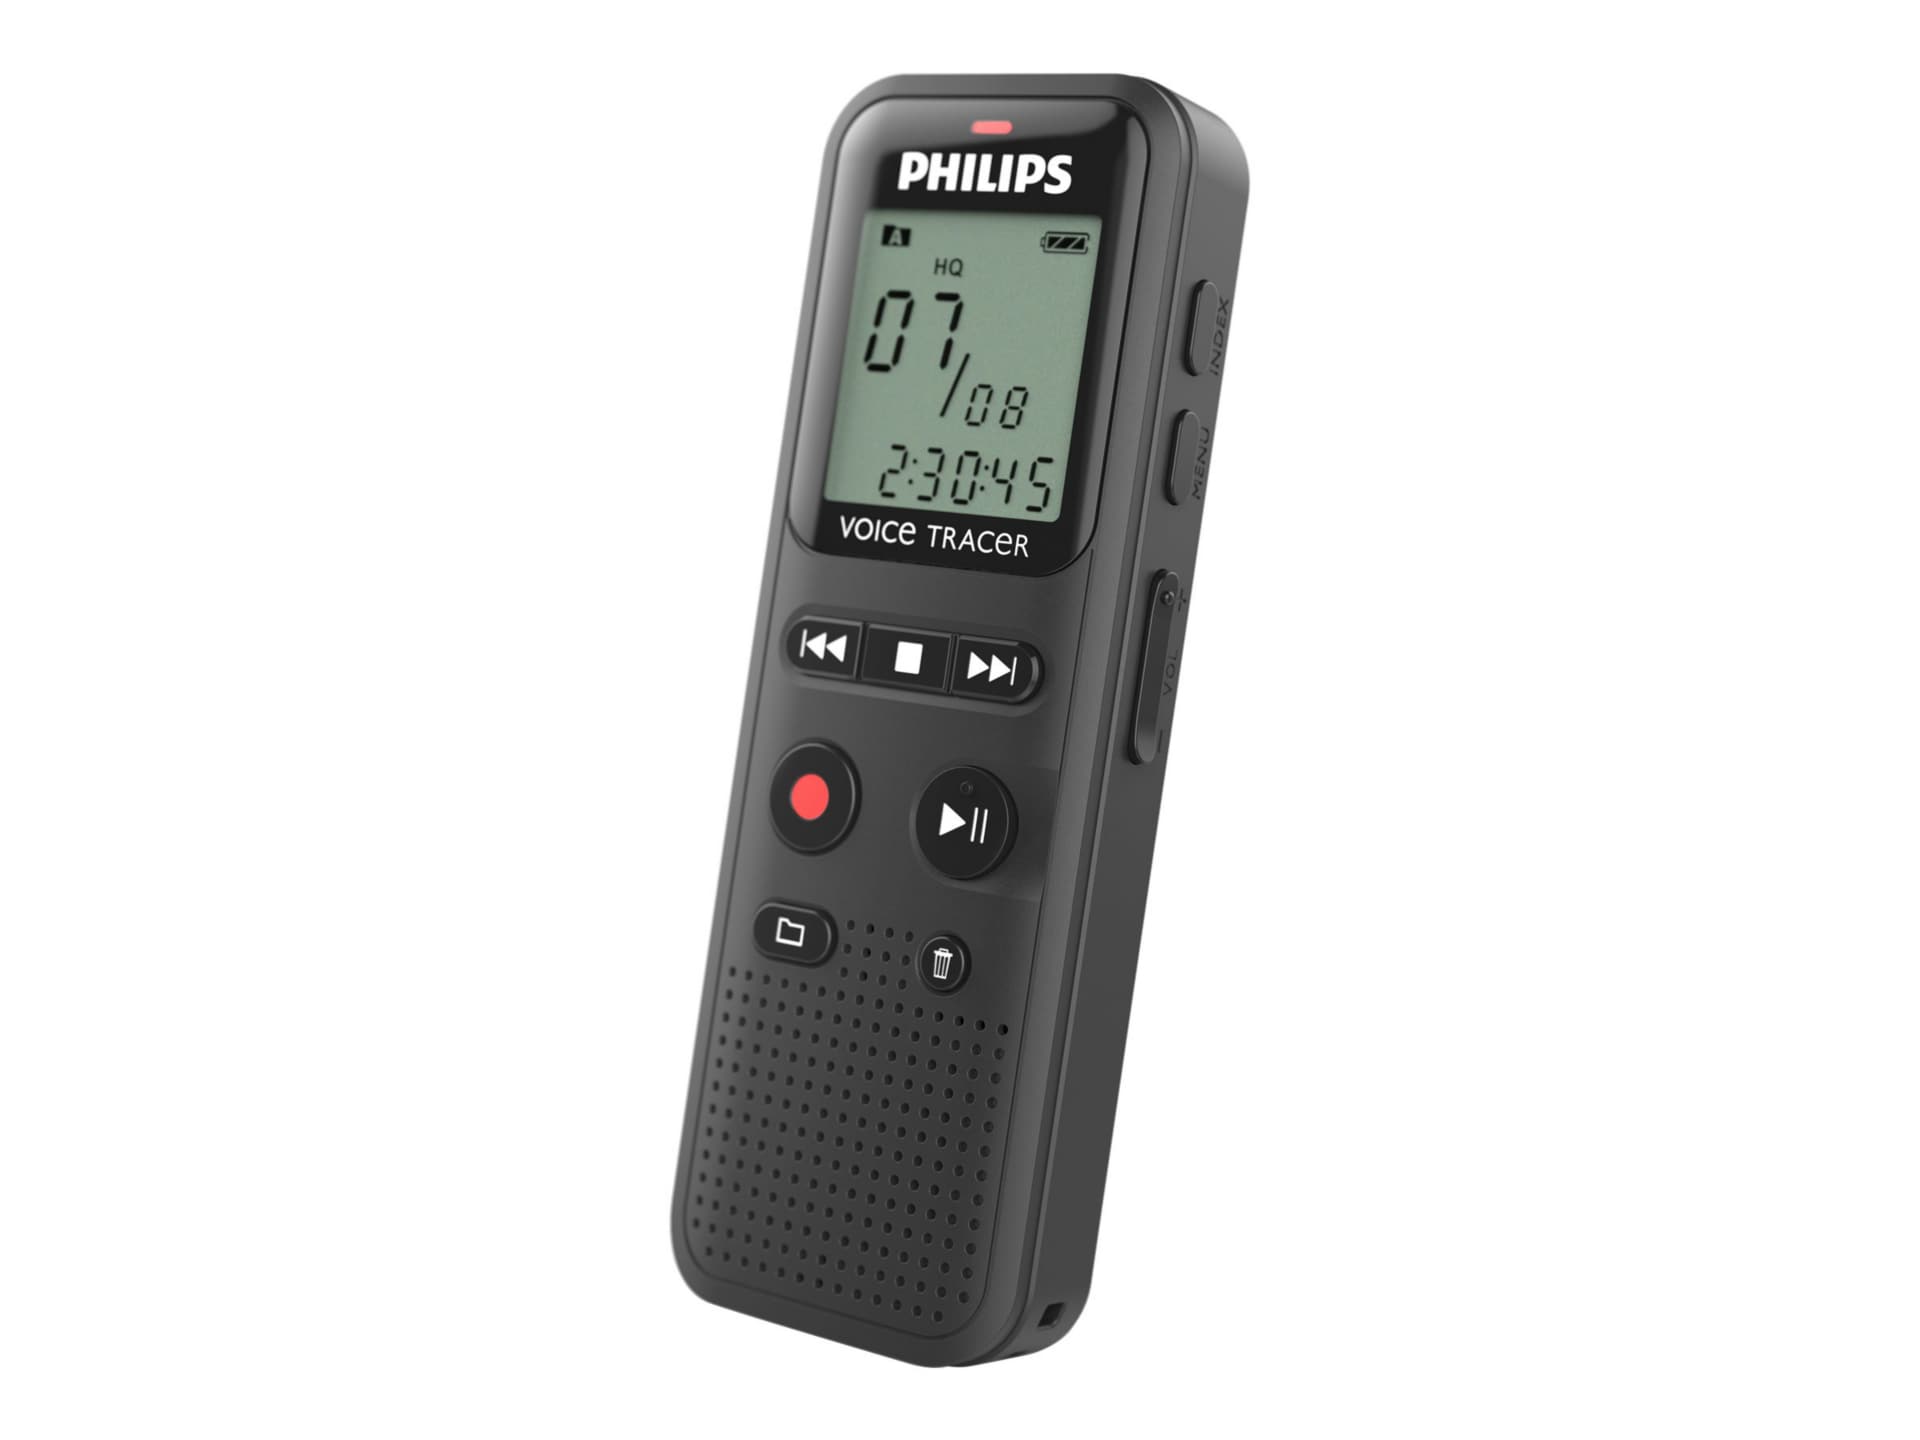 Philips Voice Tracer DVT1150 - voice recorder